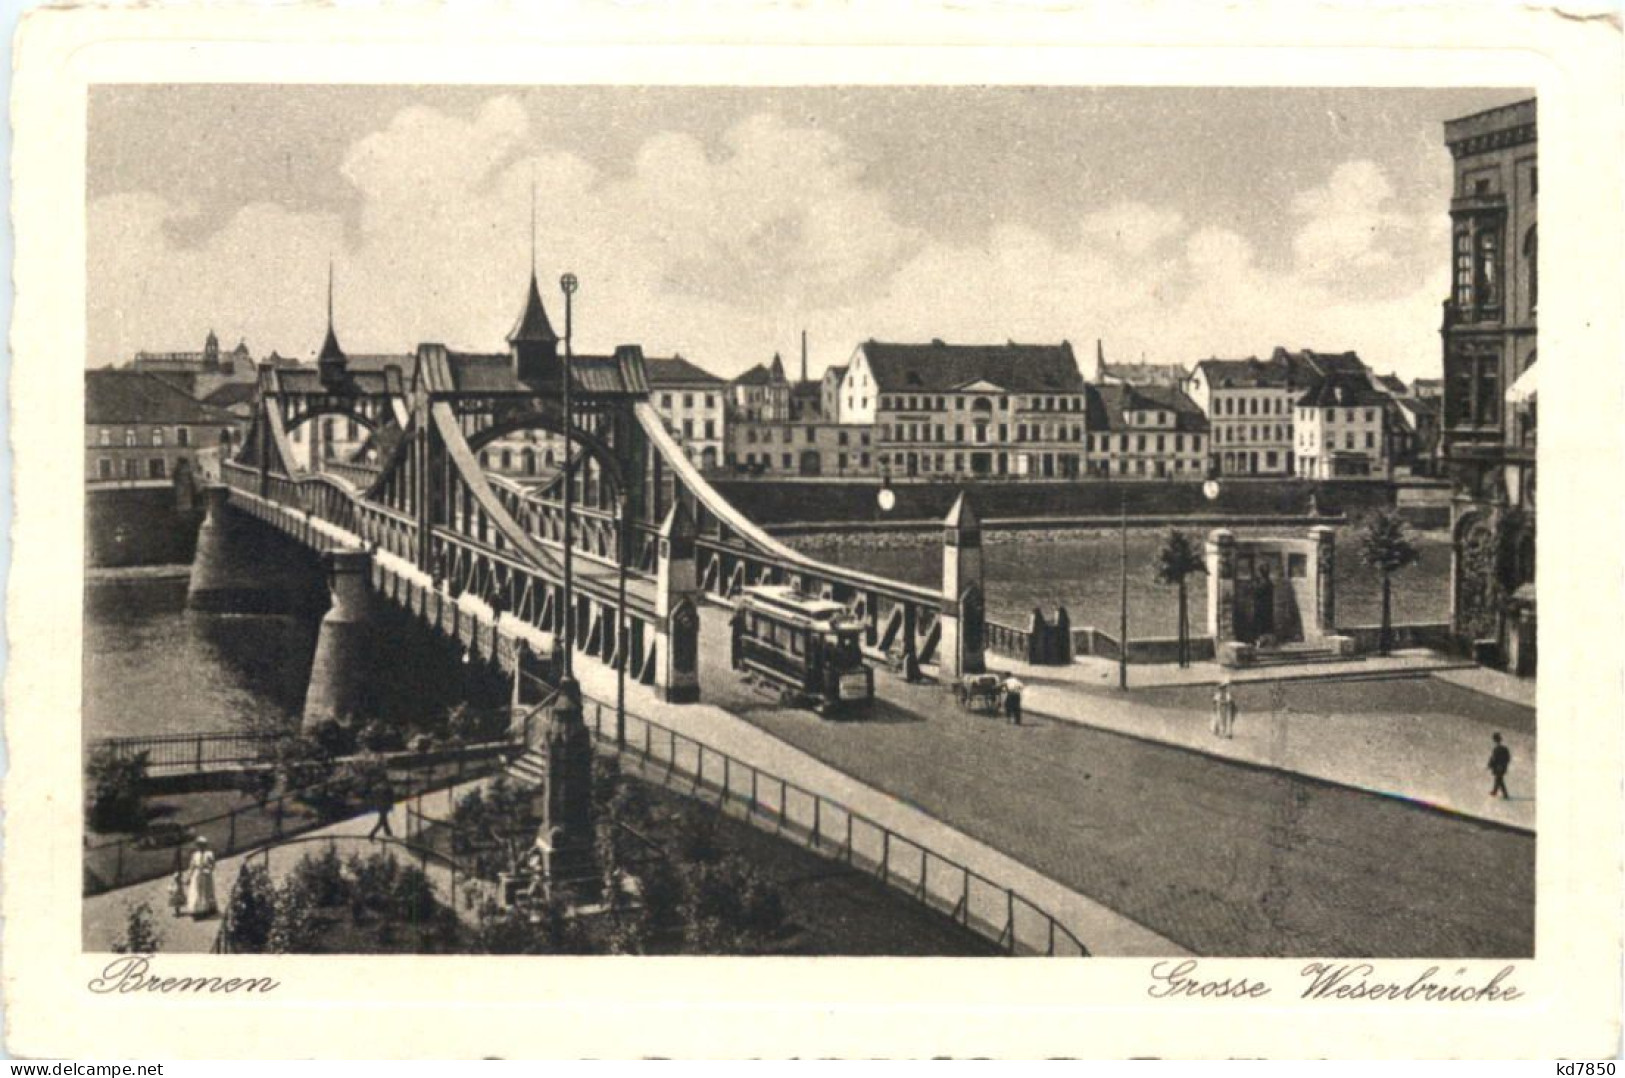 Bremen - Grosse Weserbrücke - Bremen